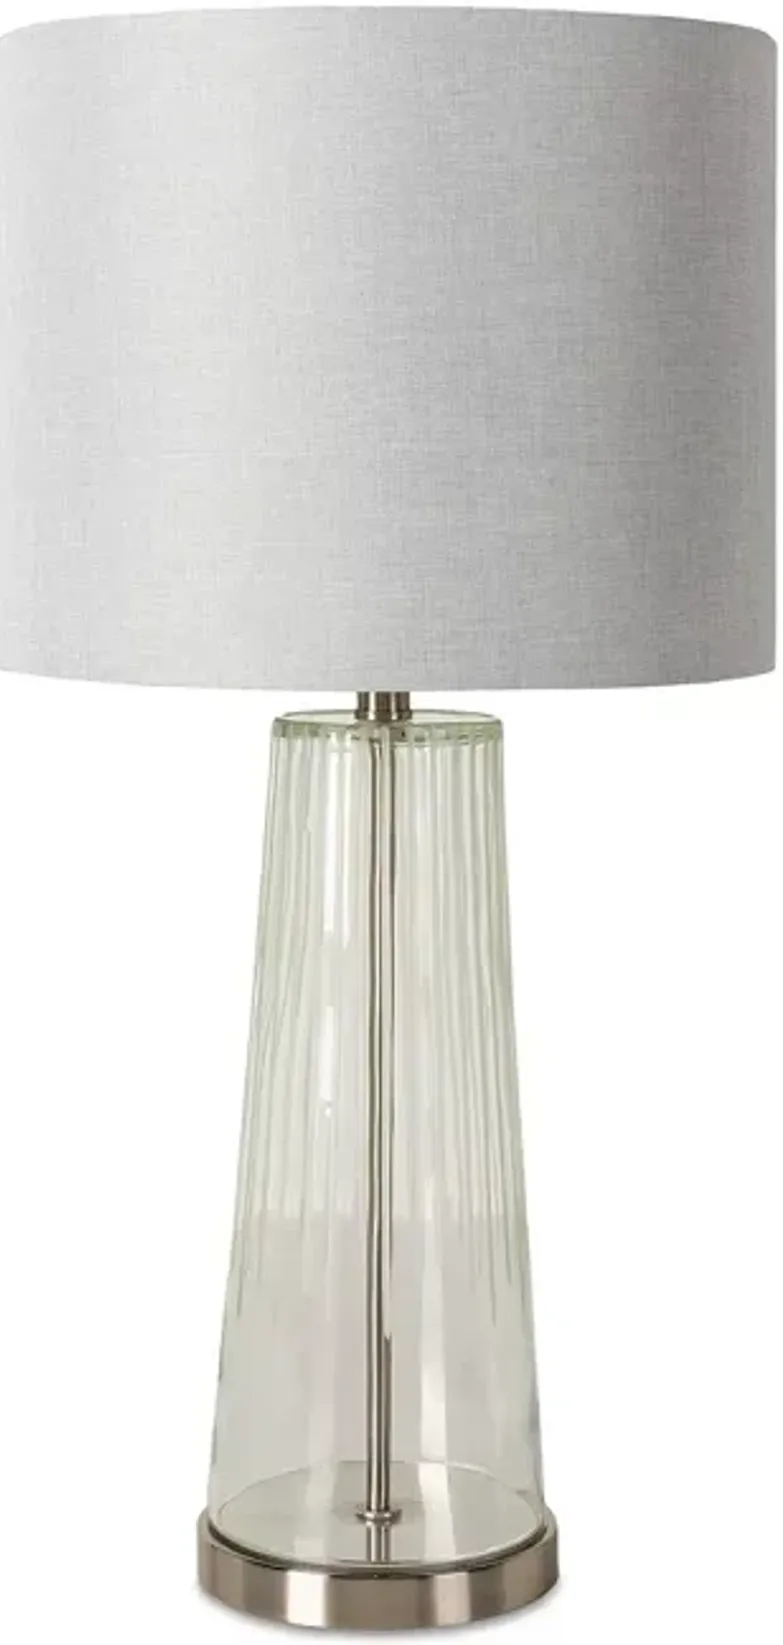 Surya Blawnox Lamp